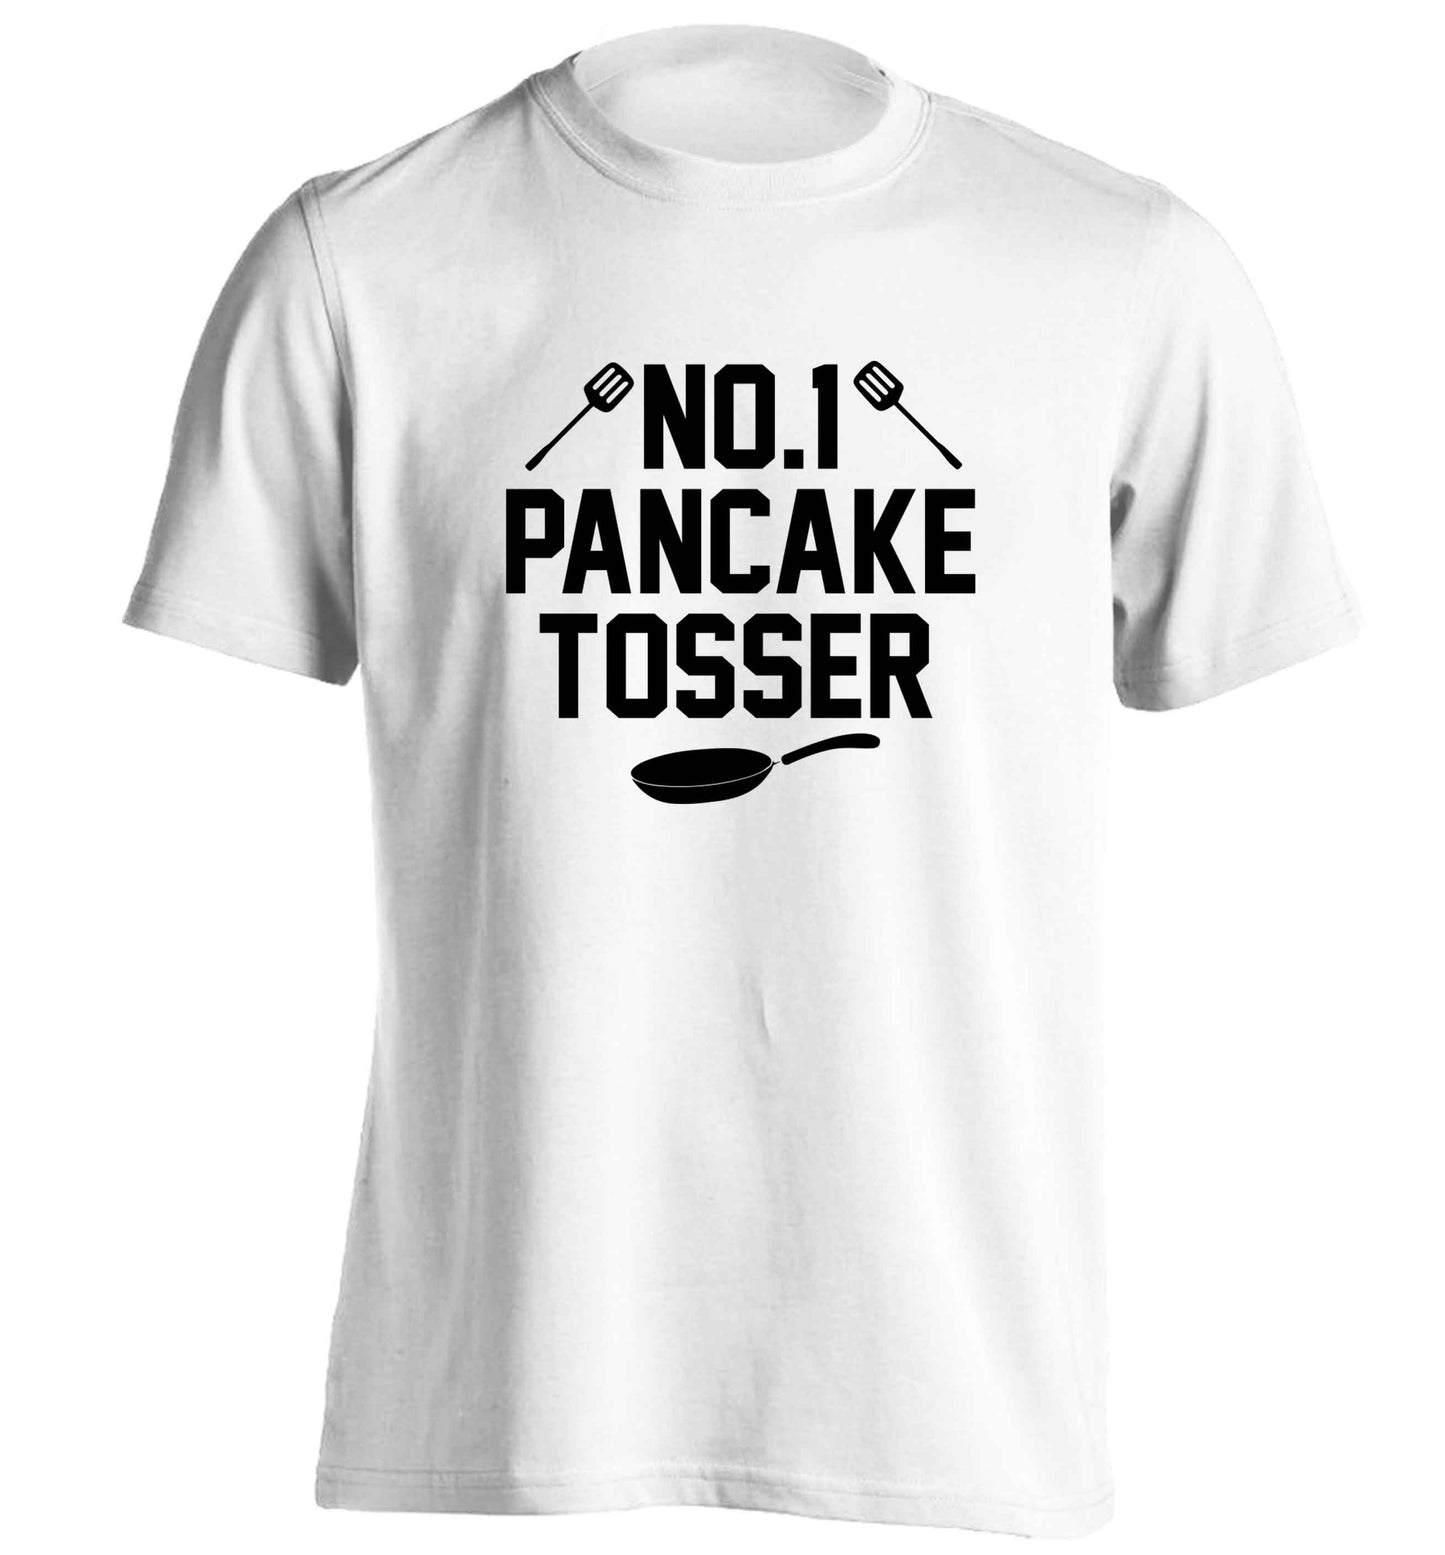 No.1 Pancake tosser adults unisex white Tshirt 2XL